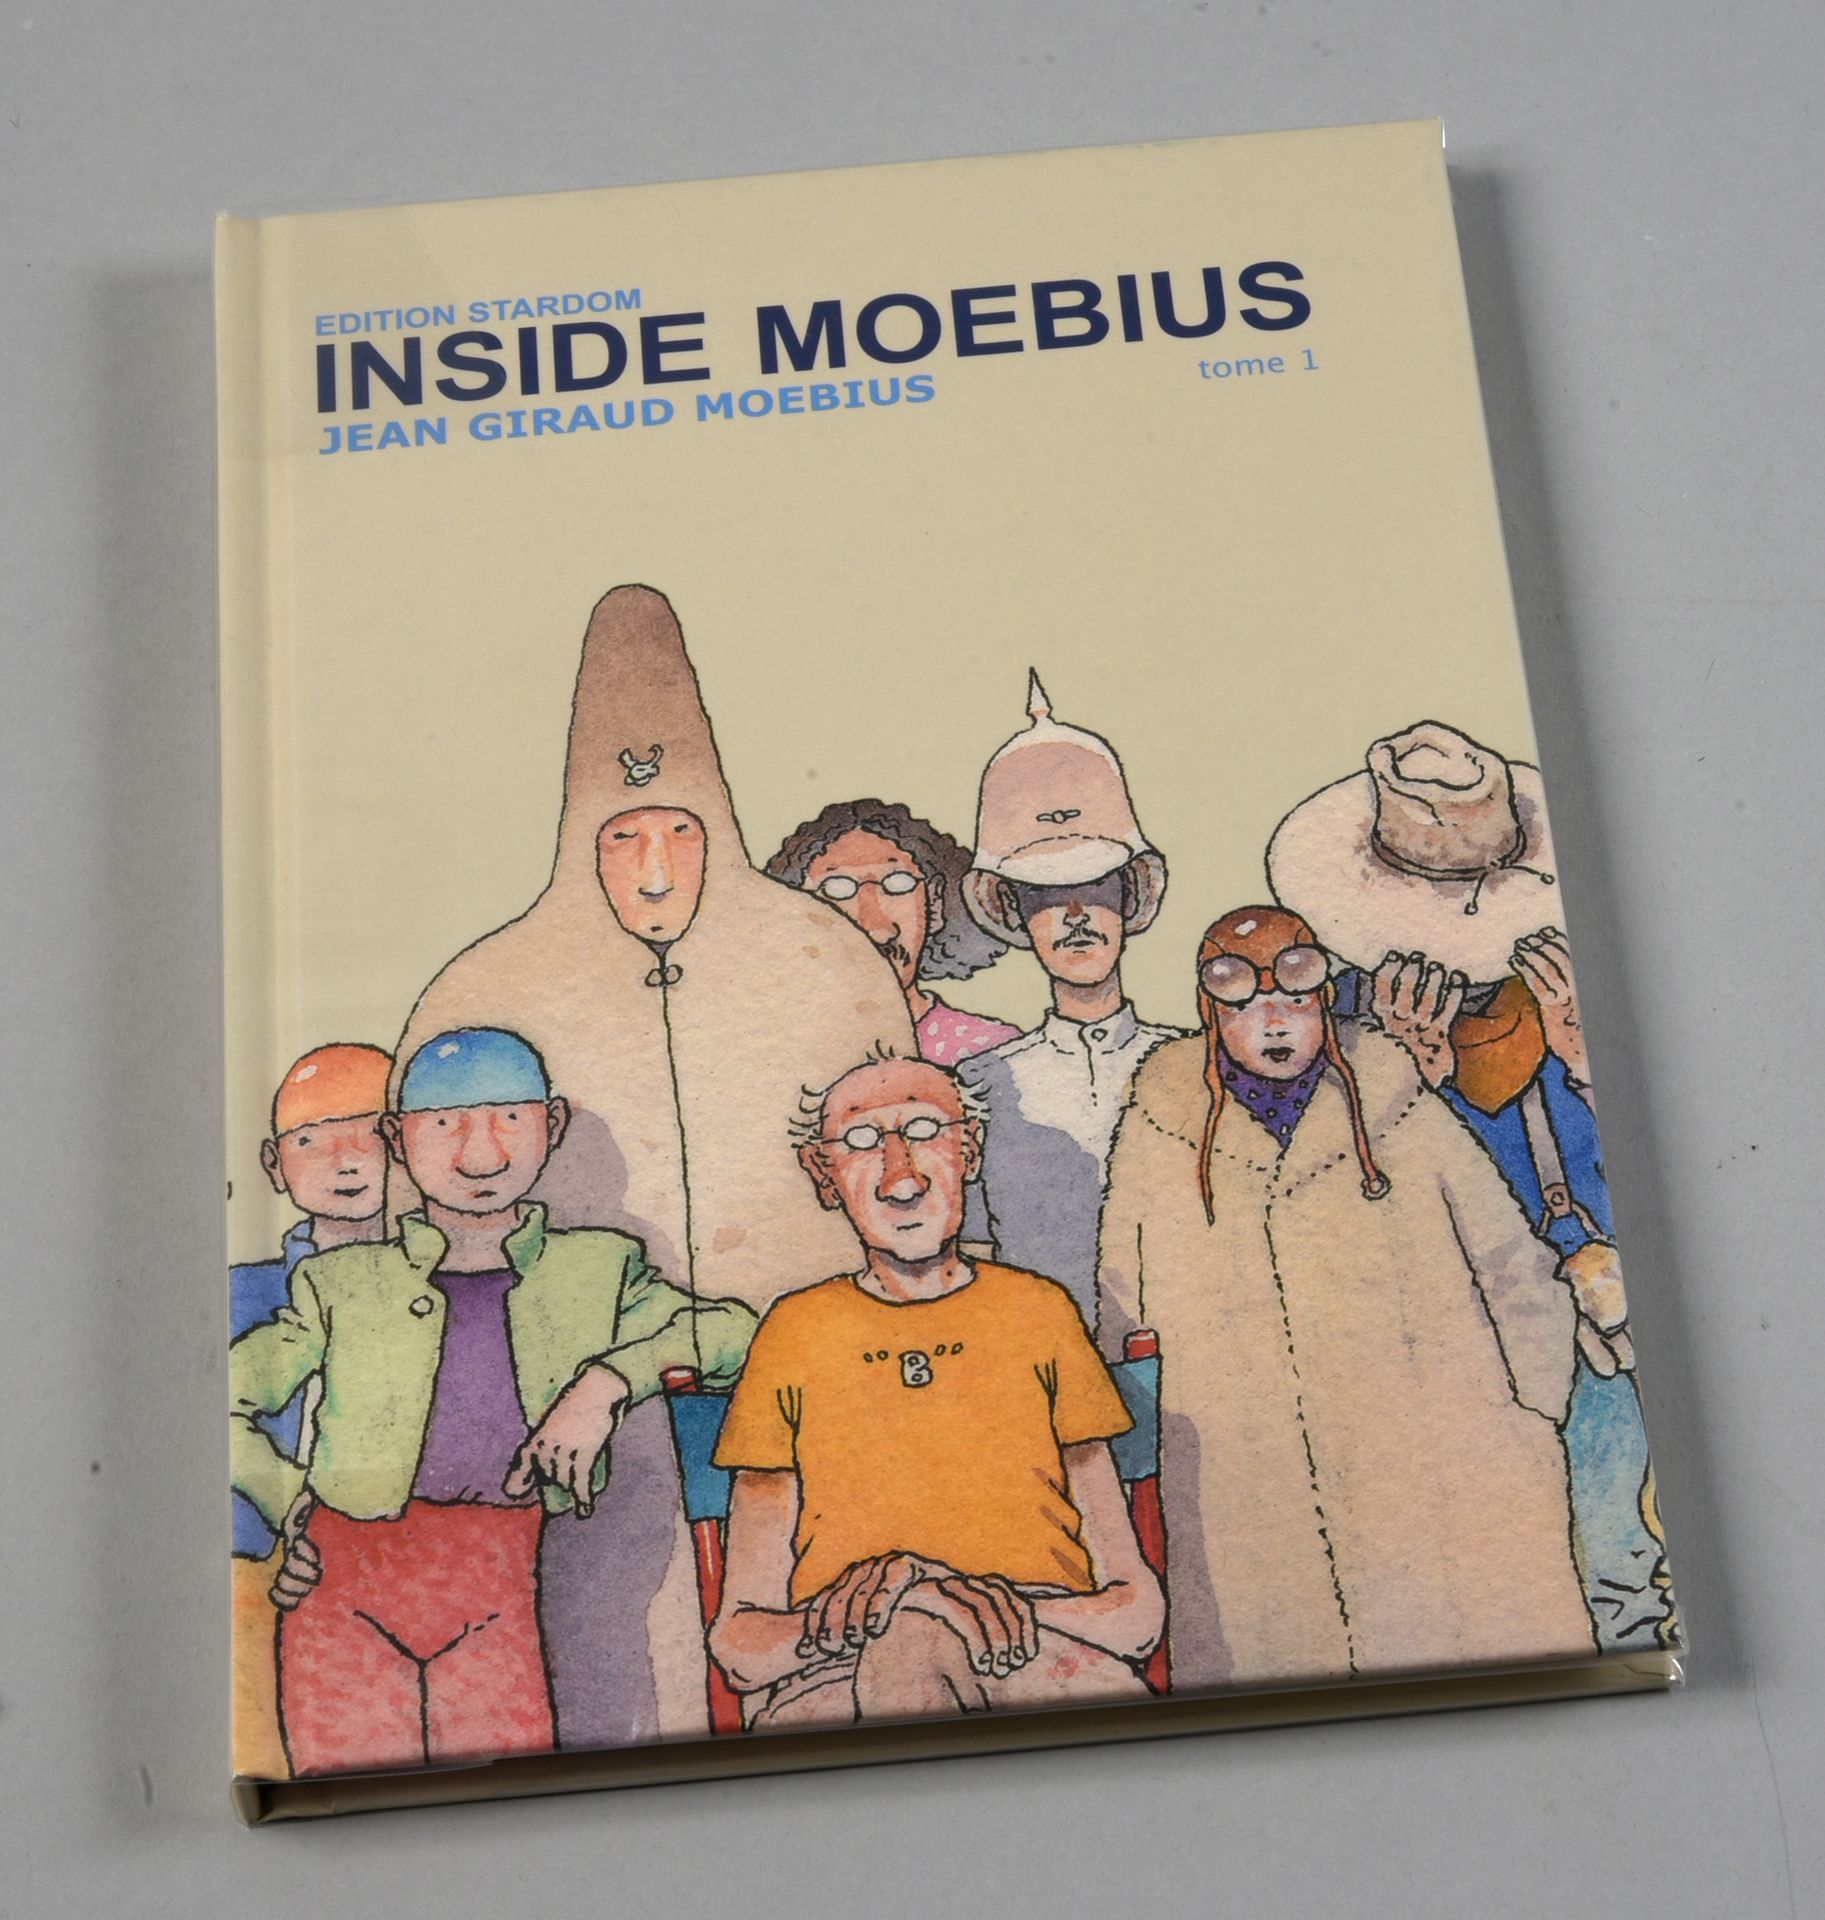 MOEBIUS 莫比乌斯内部。Stardom第一版，有莫比乌斯的铅笔画。签名和日期为2005年。相册处于近乎完美的状态。